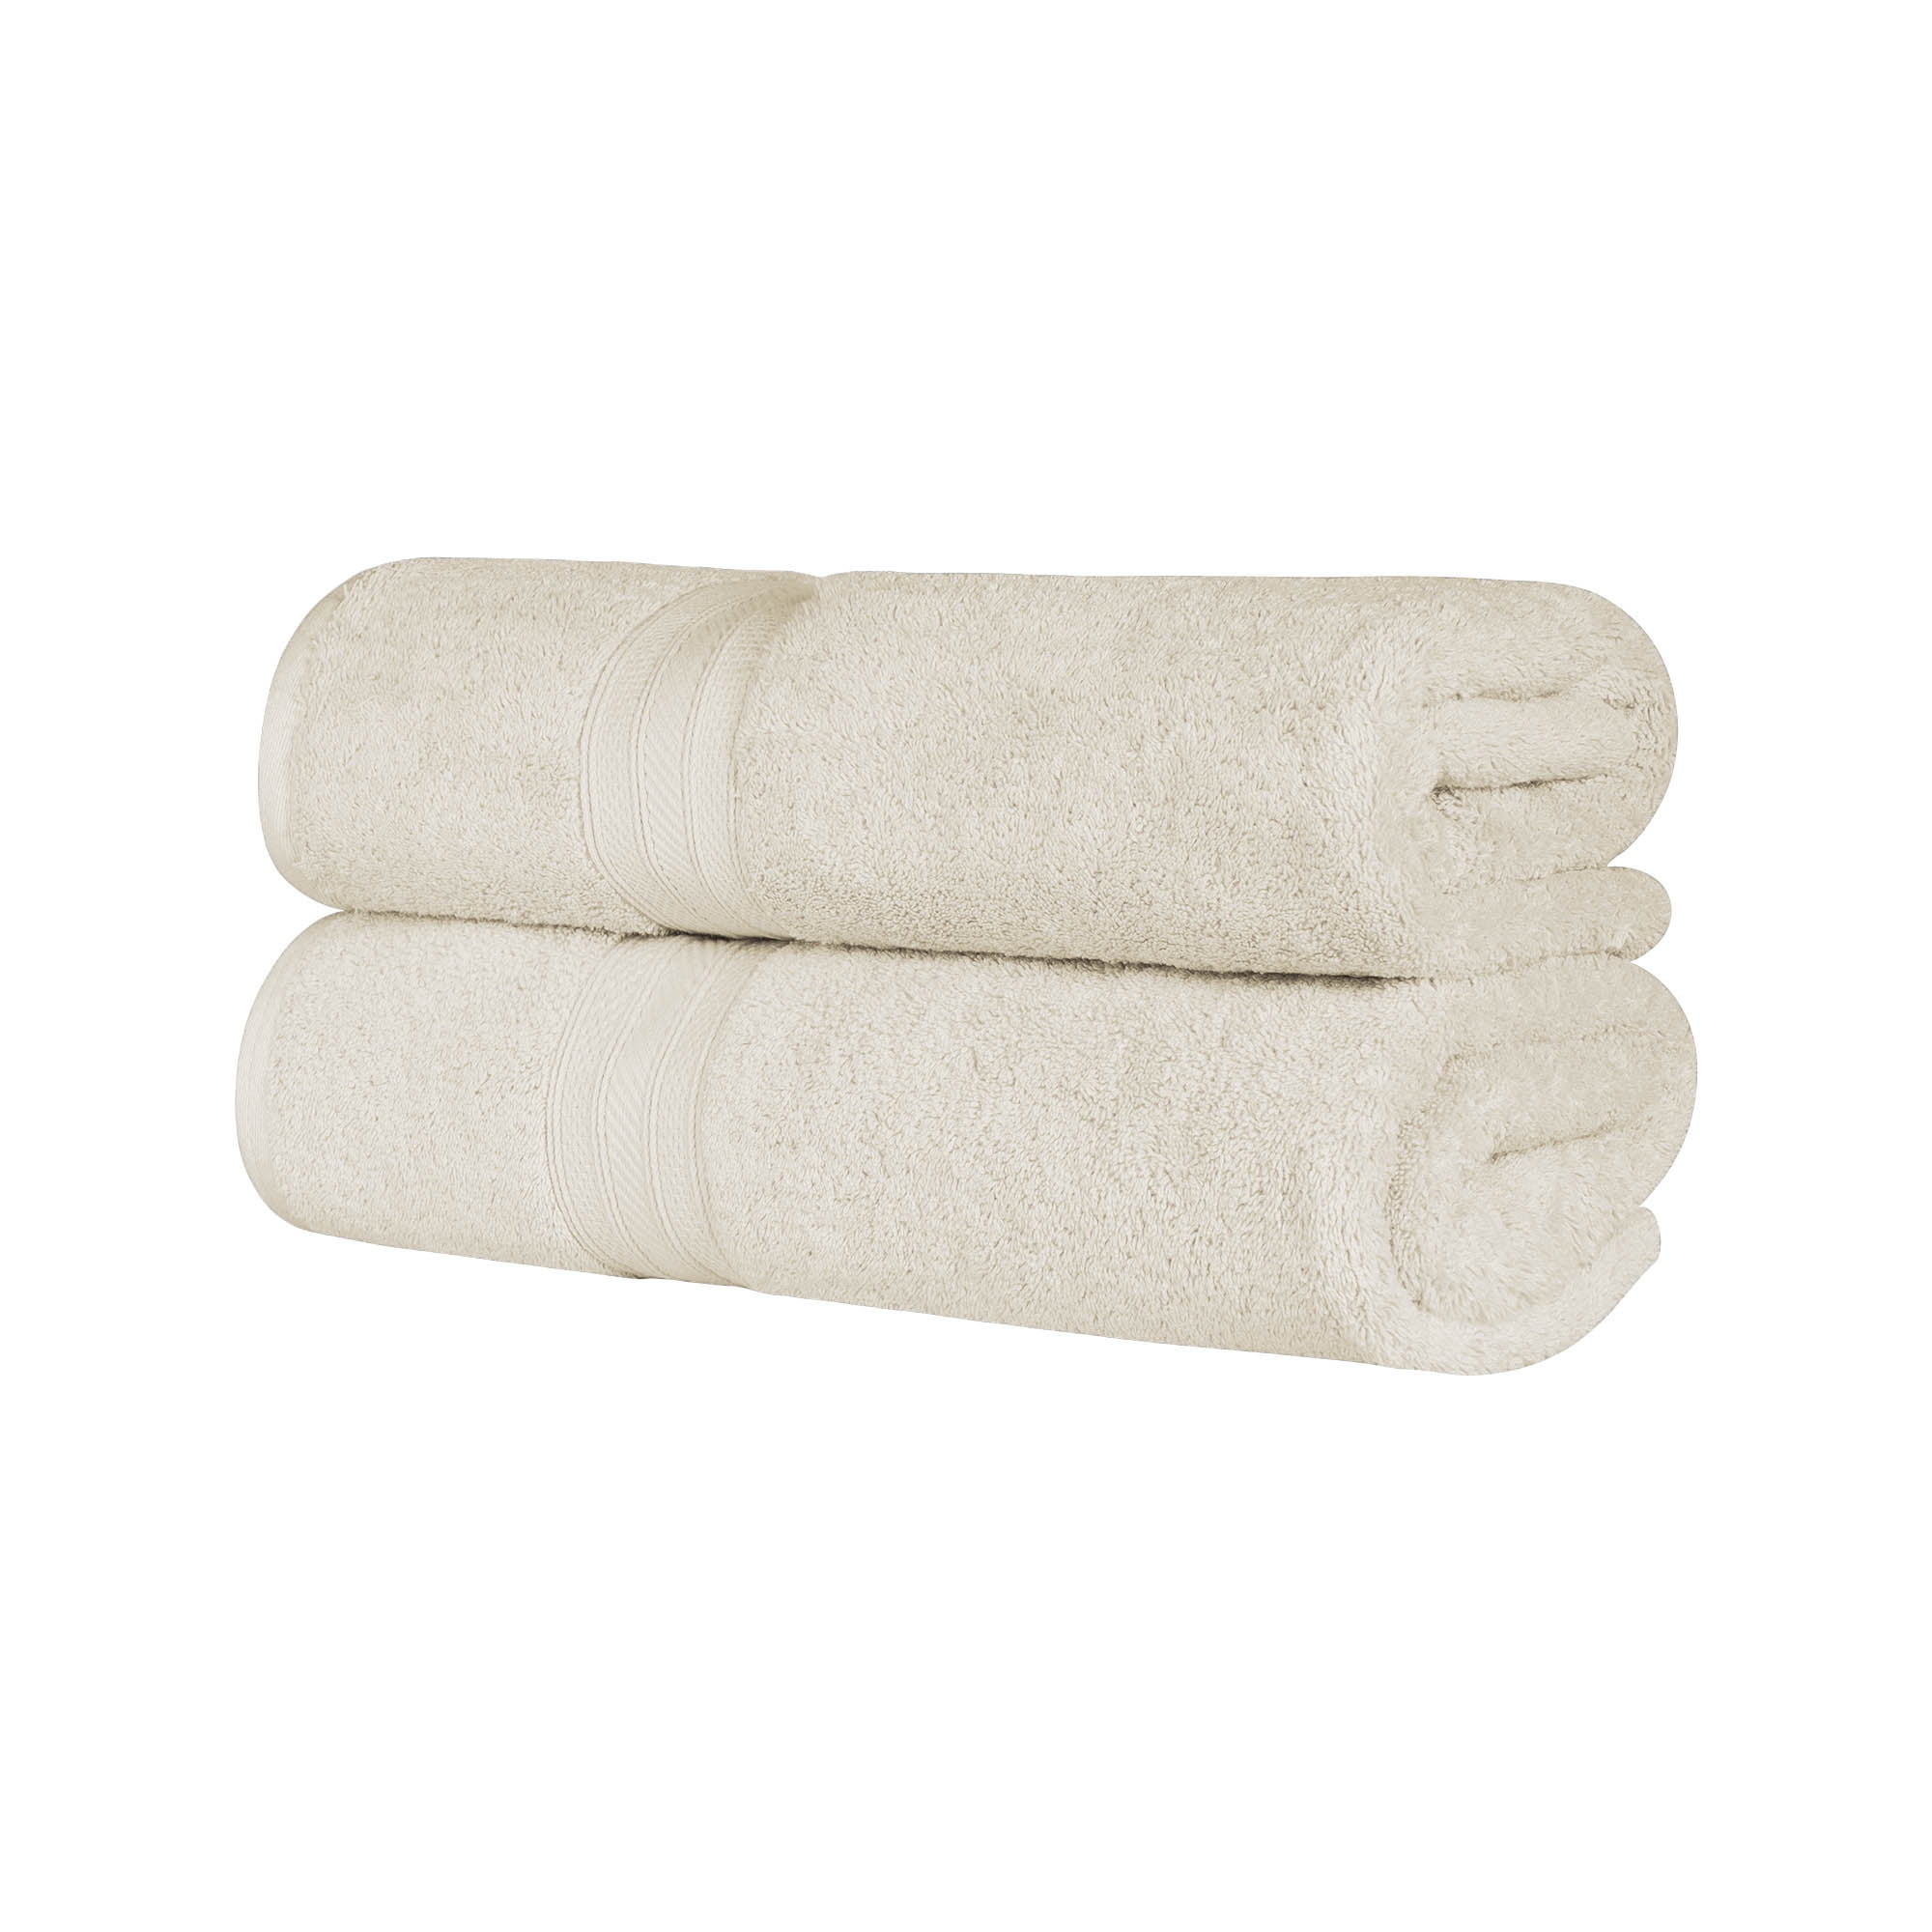 8-Piece Green 100% Cotton Plush Bath Towel Set 312658RJB - The Home Depot